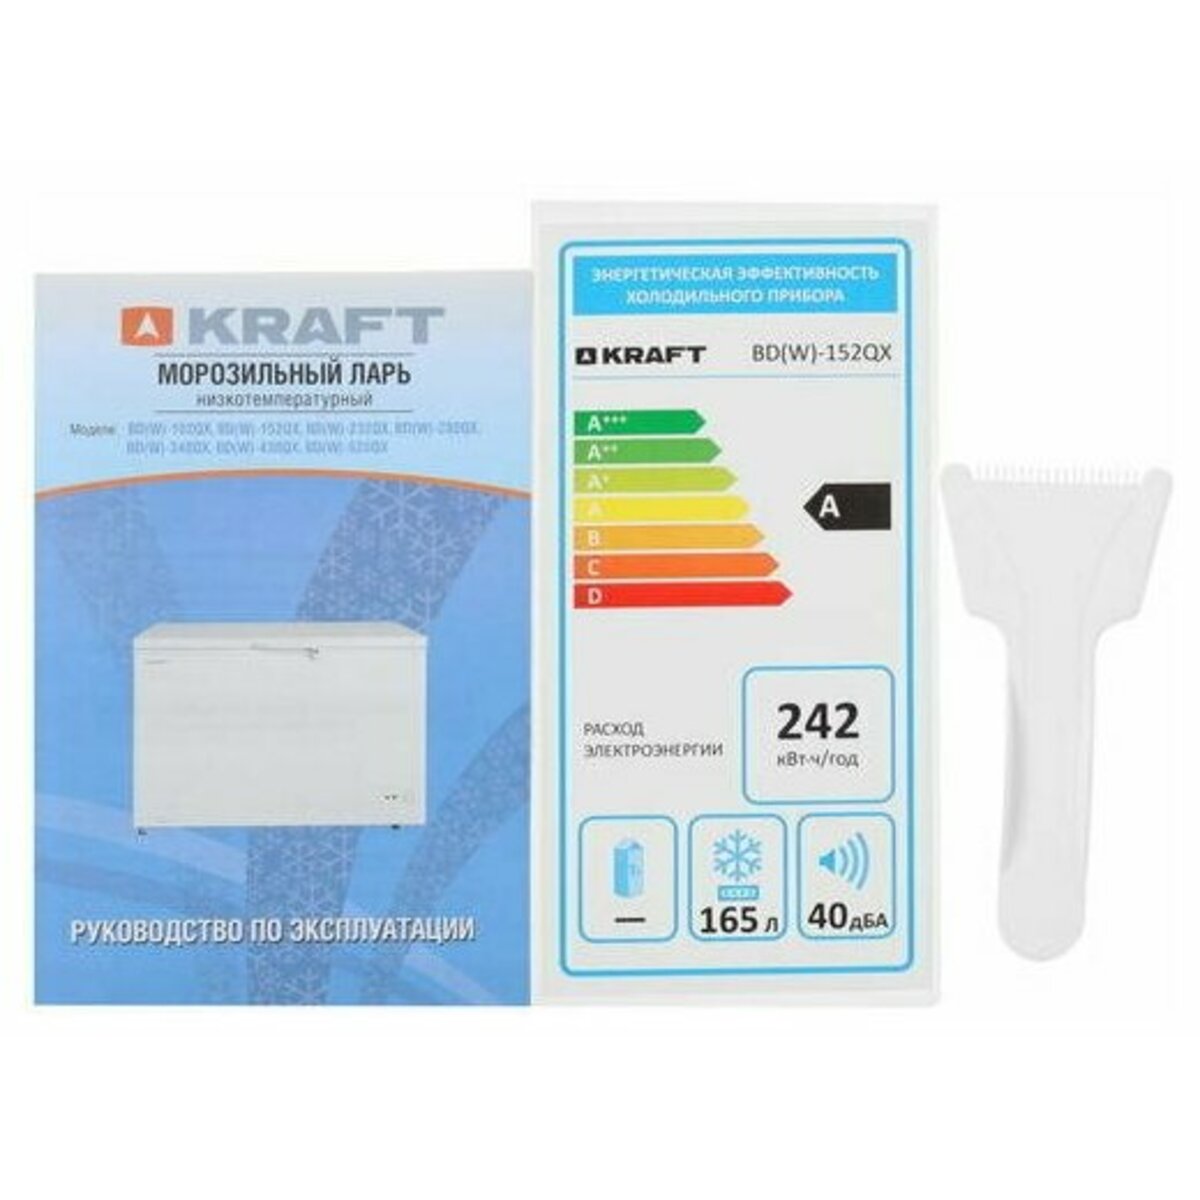 Морозильный ларь Kraft BD (W)-152QX (Цвет: White)